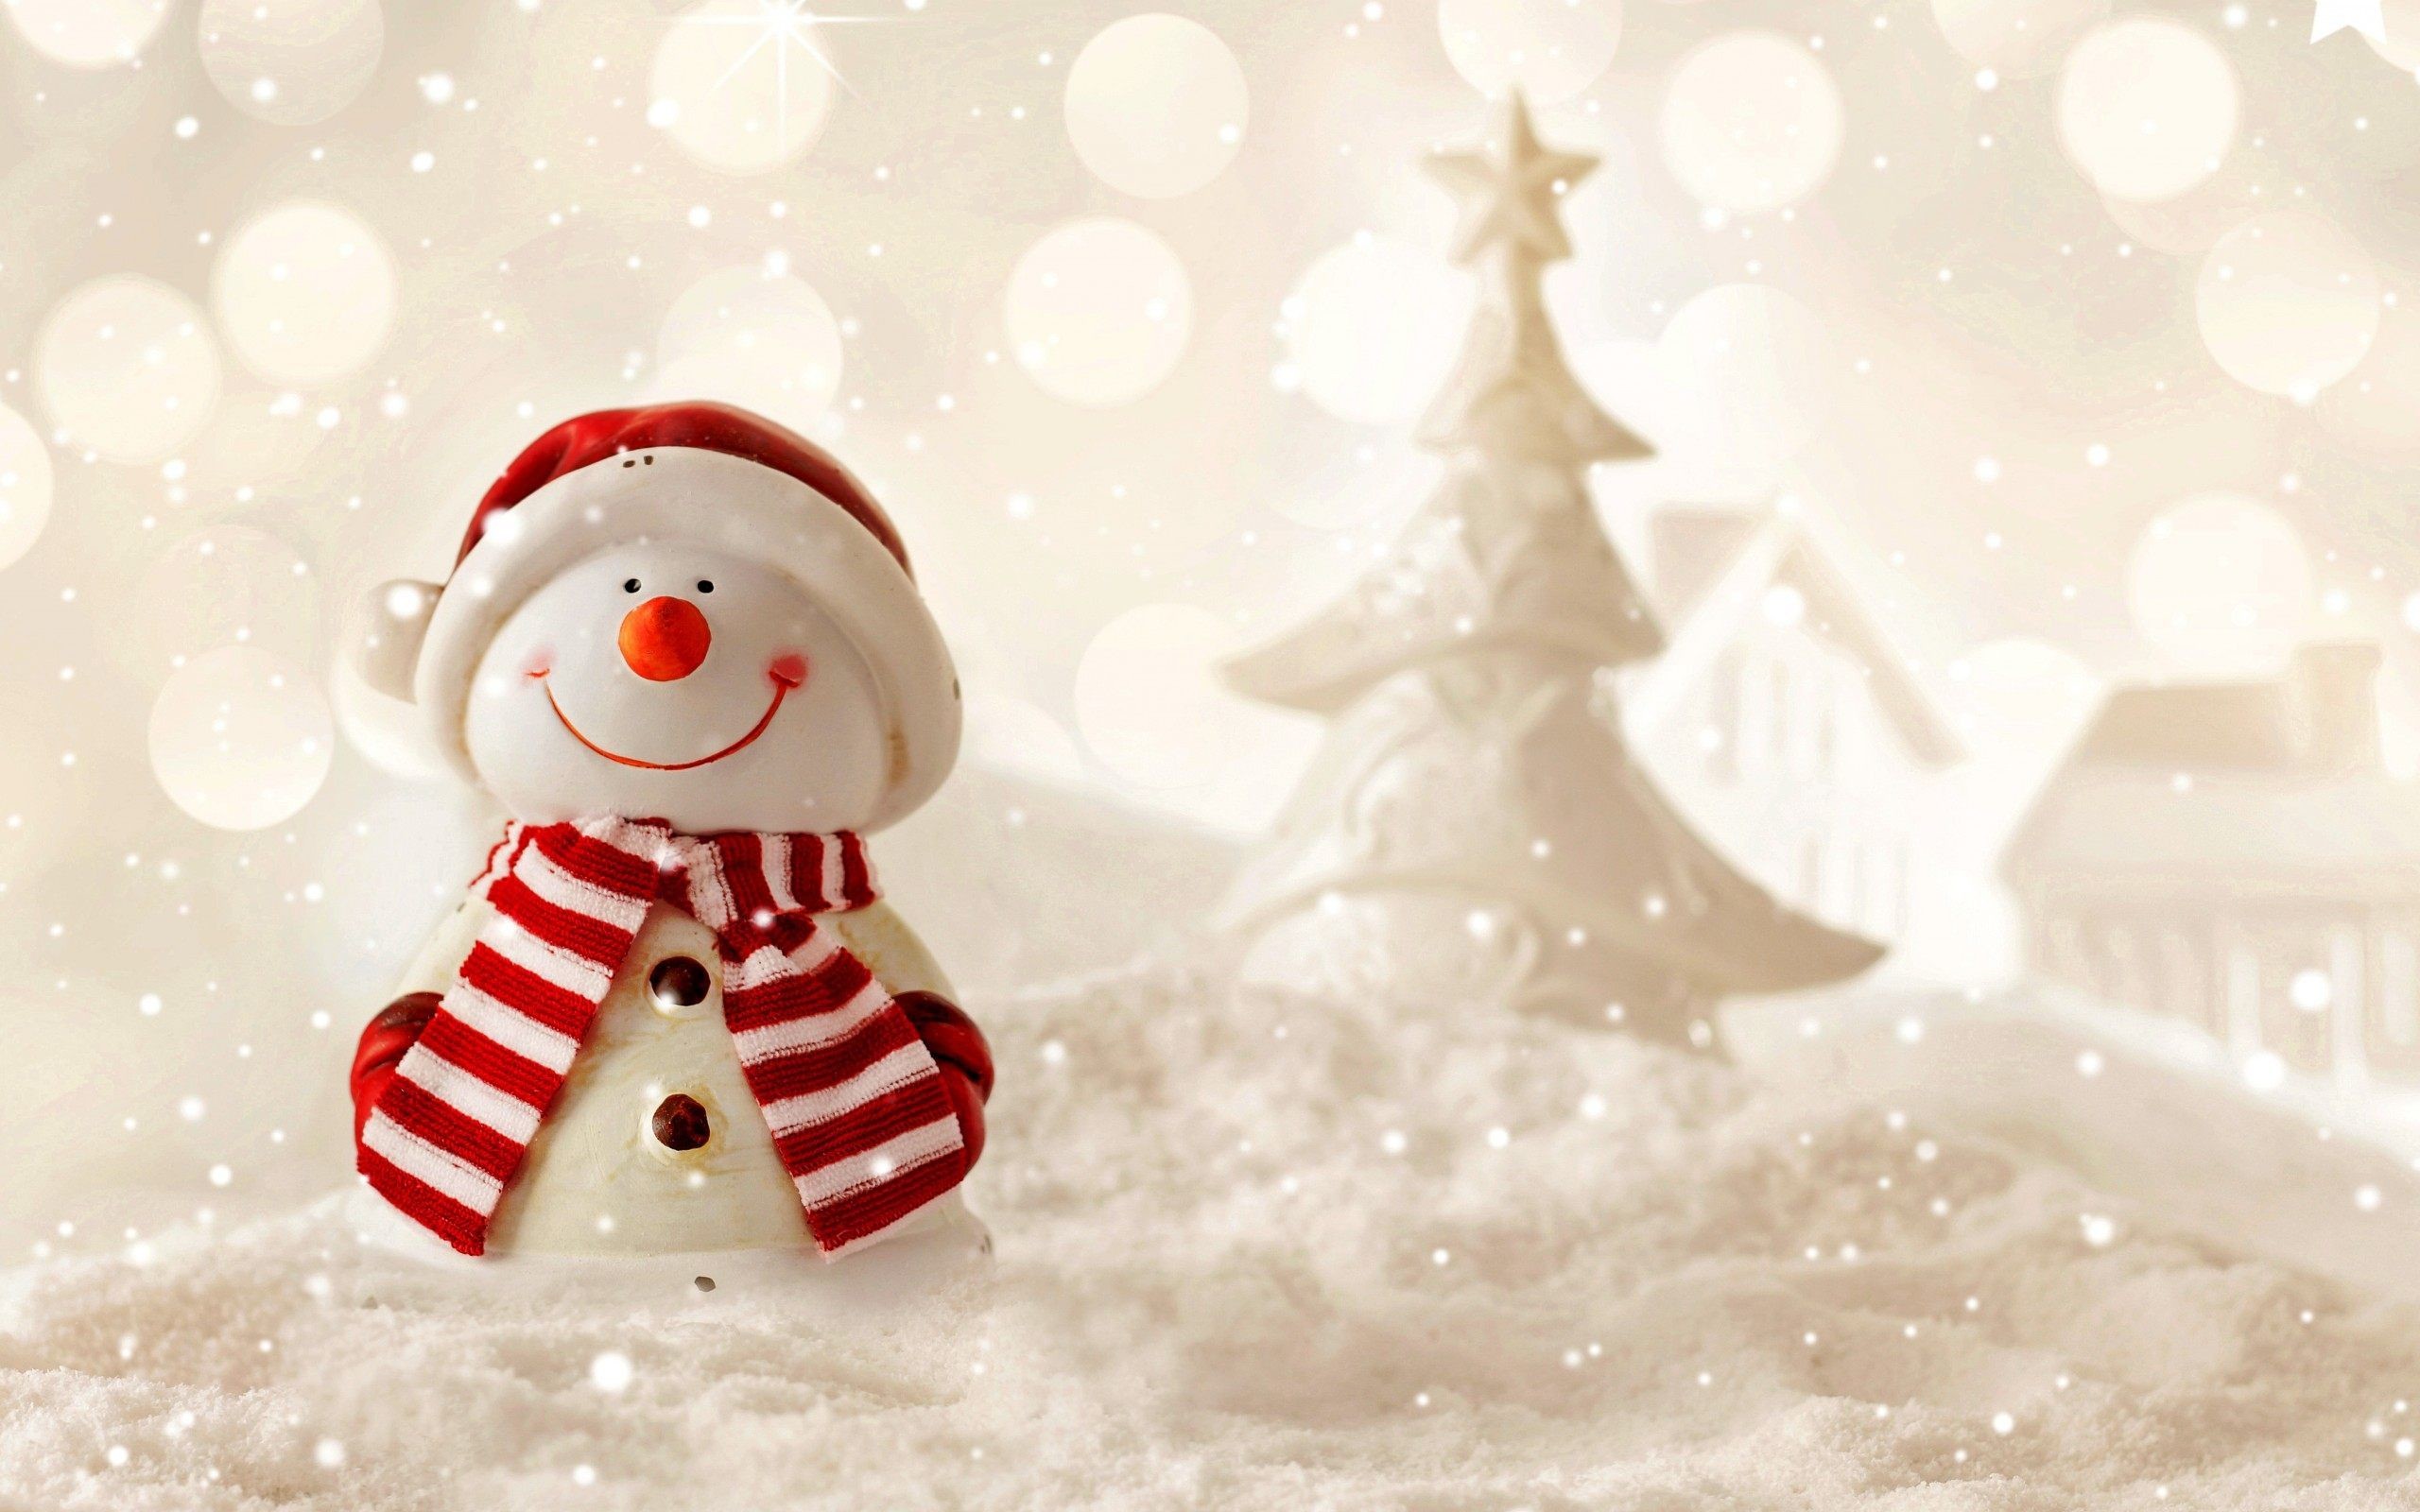 Snowman Wallpaper For Desktop, Laptop & Mobile In High - Holiday Desktop Backgrounds Snowmen - HD Wallpaper 